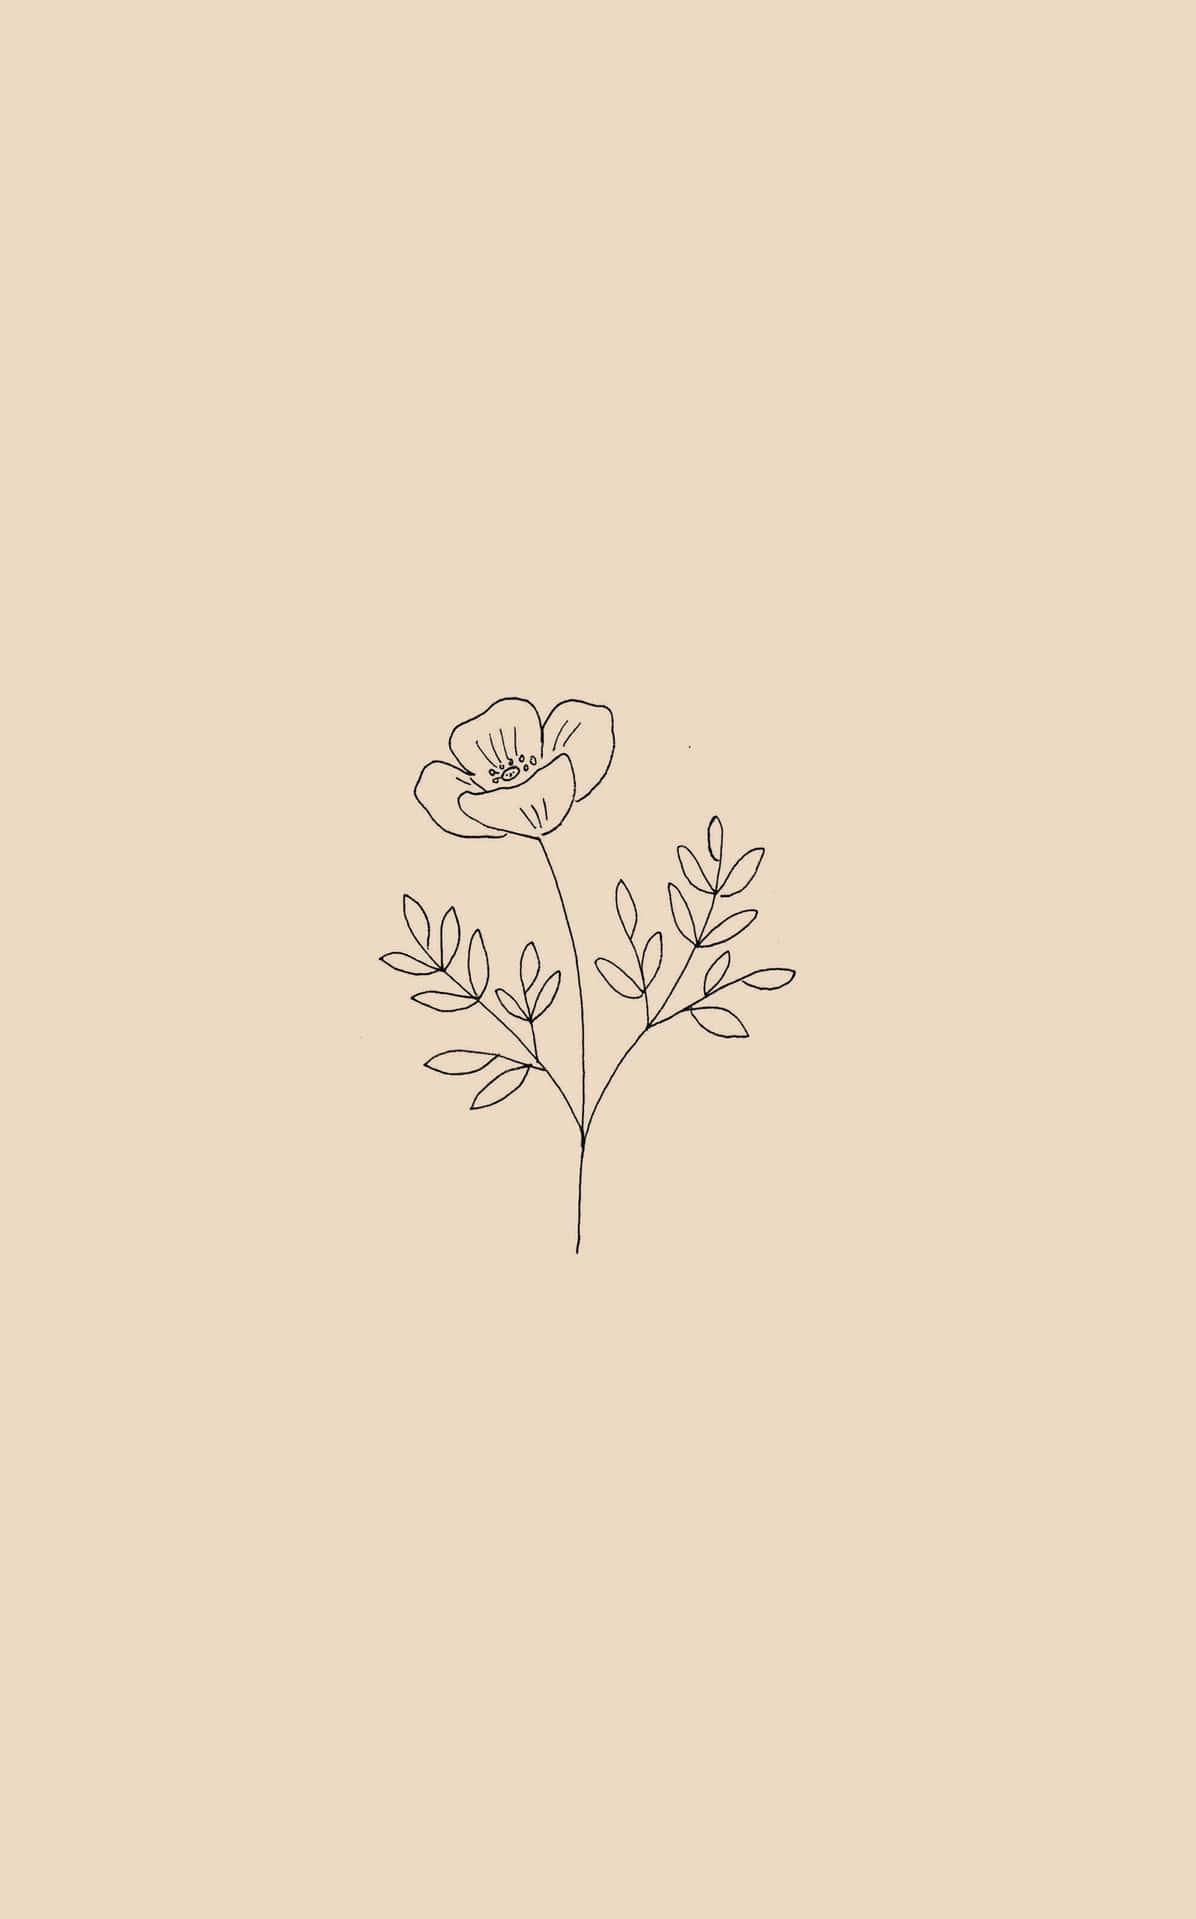 A Simple Flower Design On Beige Background Wallpaper